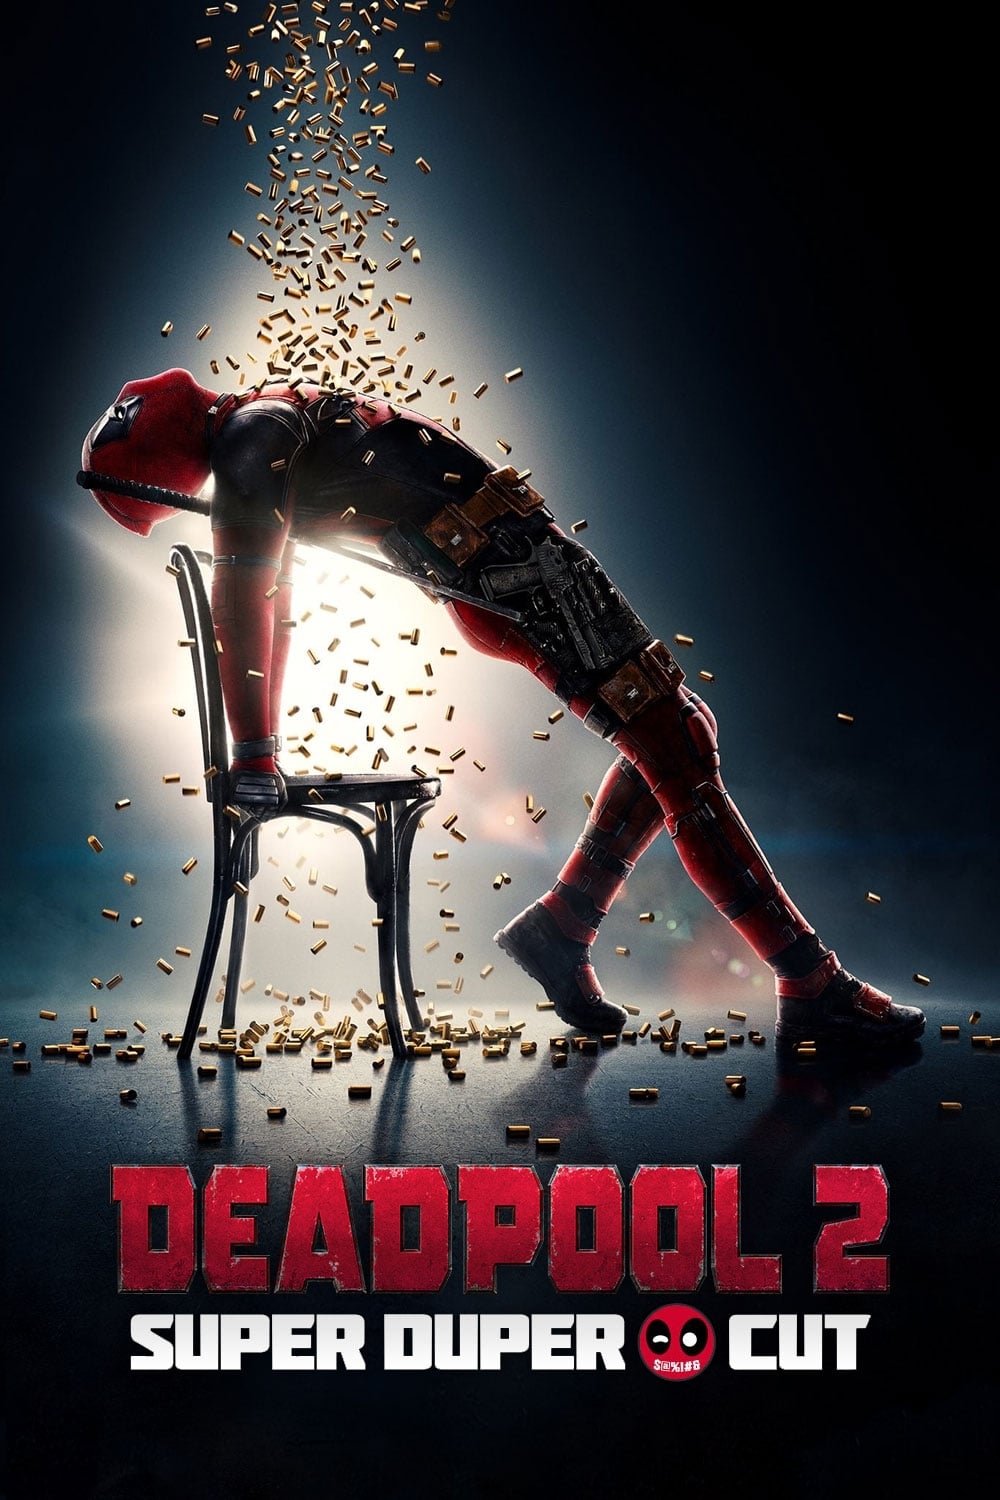 Deadpool 2 (2018) Super Duper Cut PLACEBO Full HD 1080p Latino